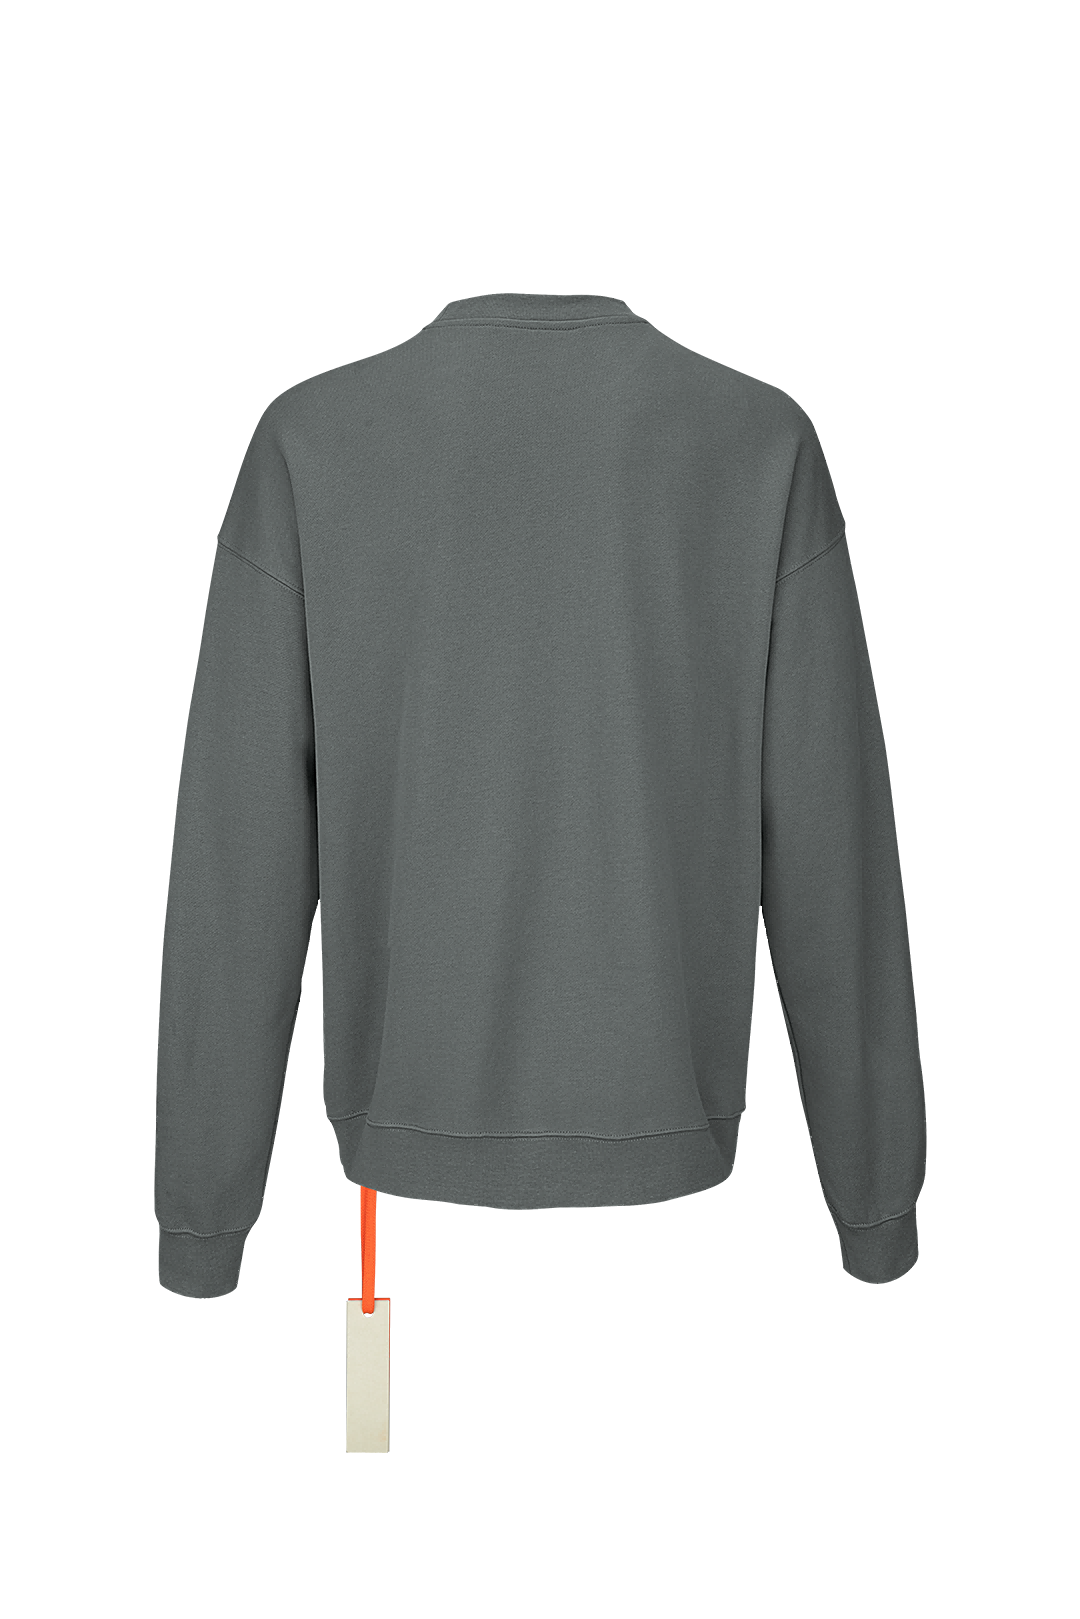 12# Arrows Men's Sweatshirt Round Neck